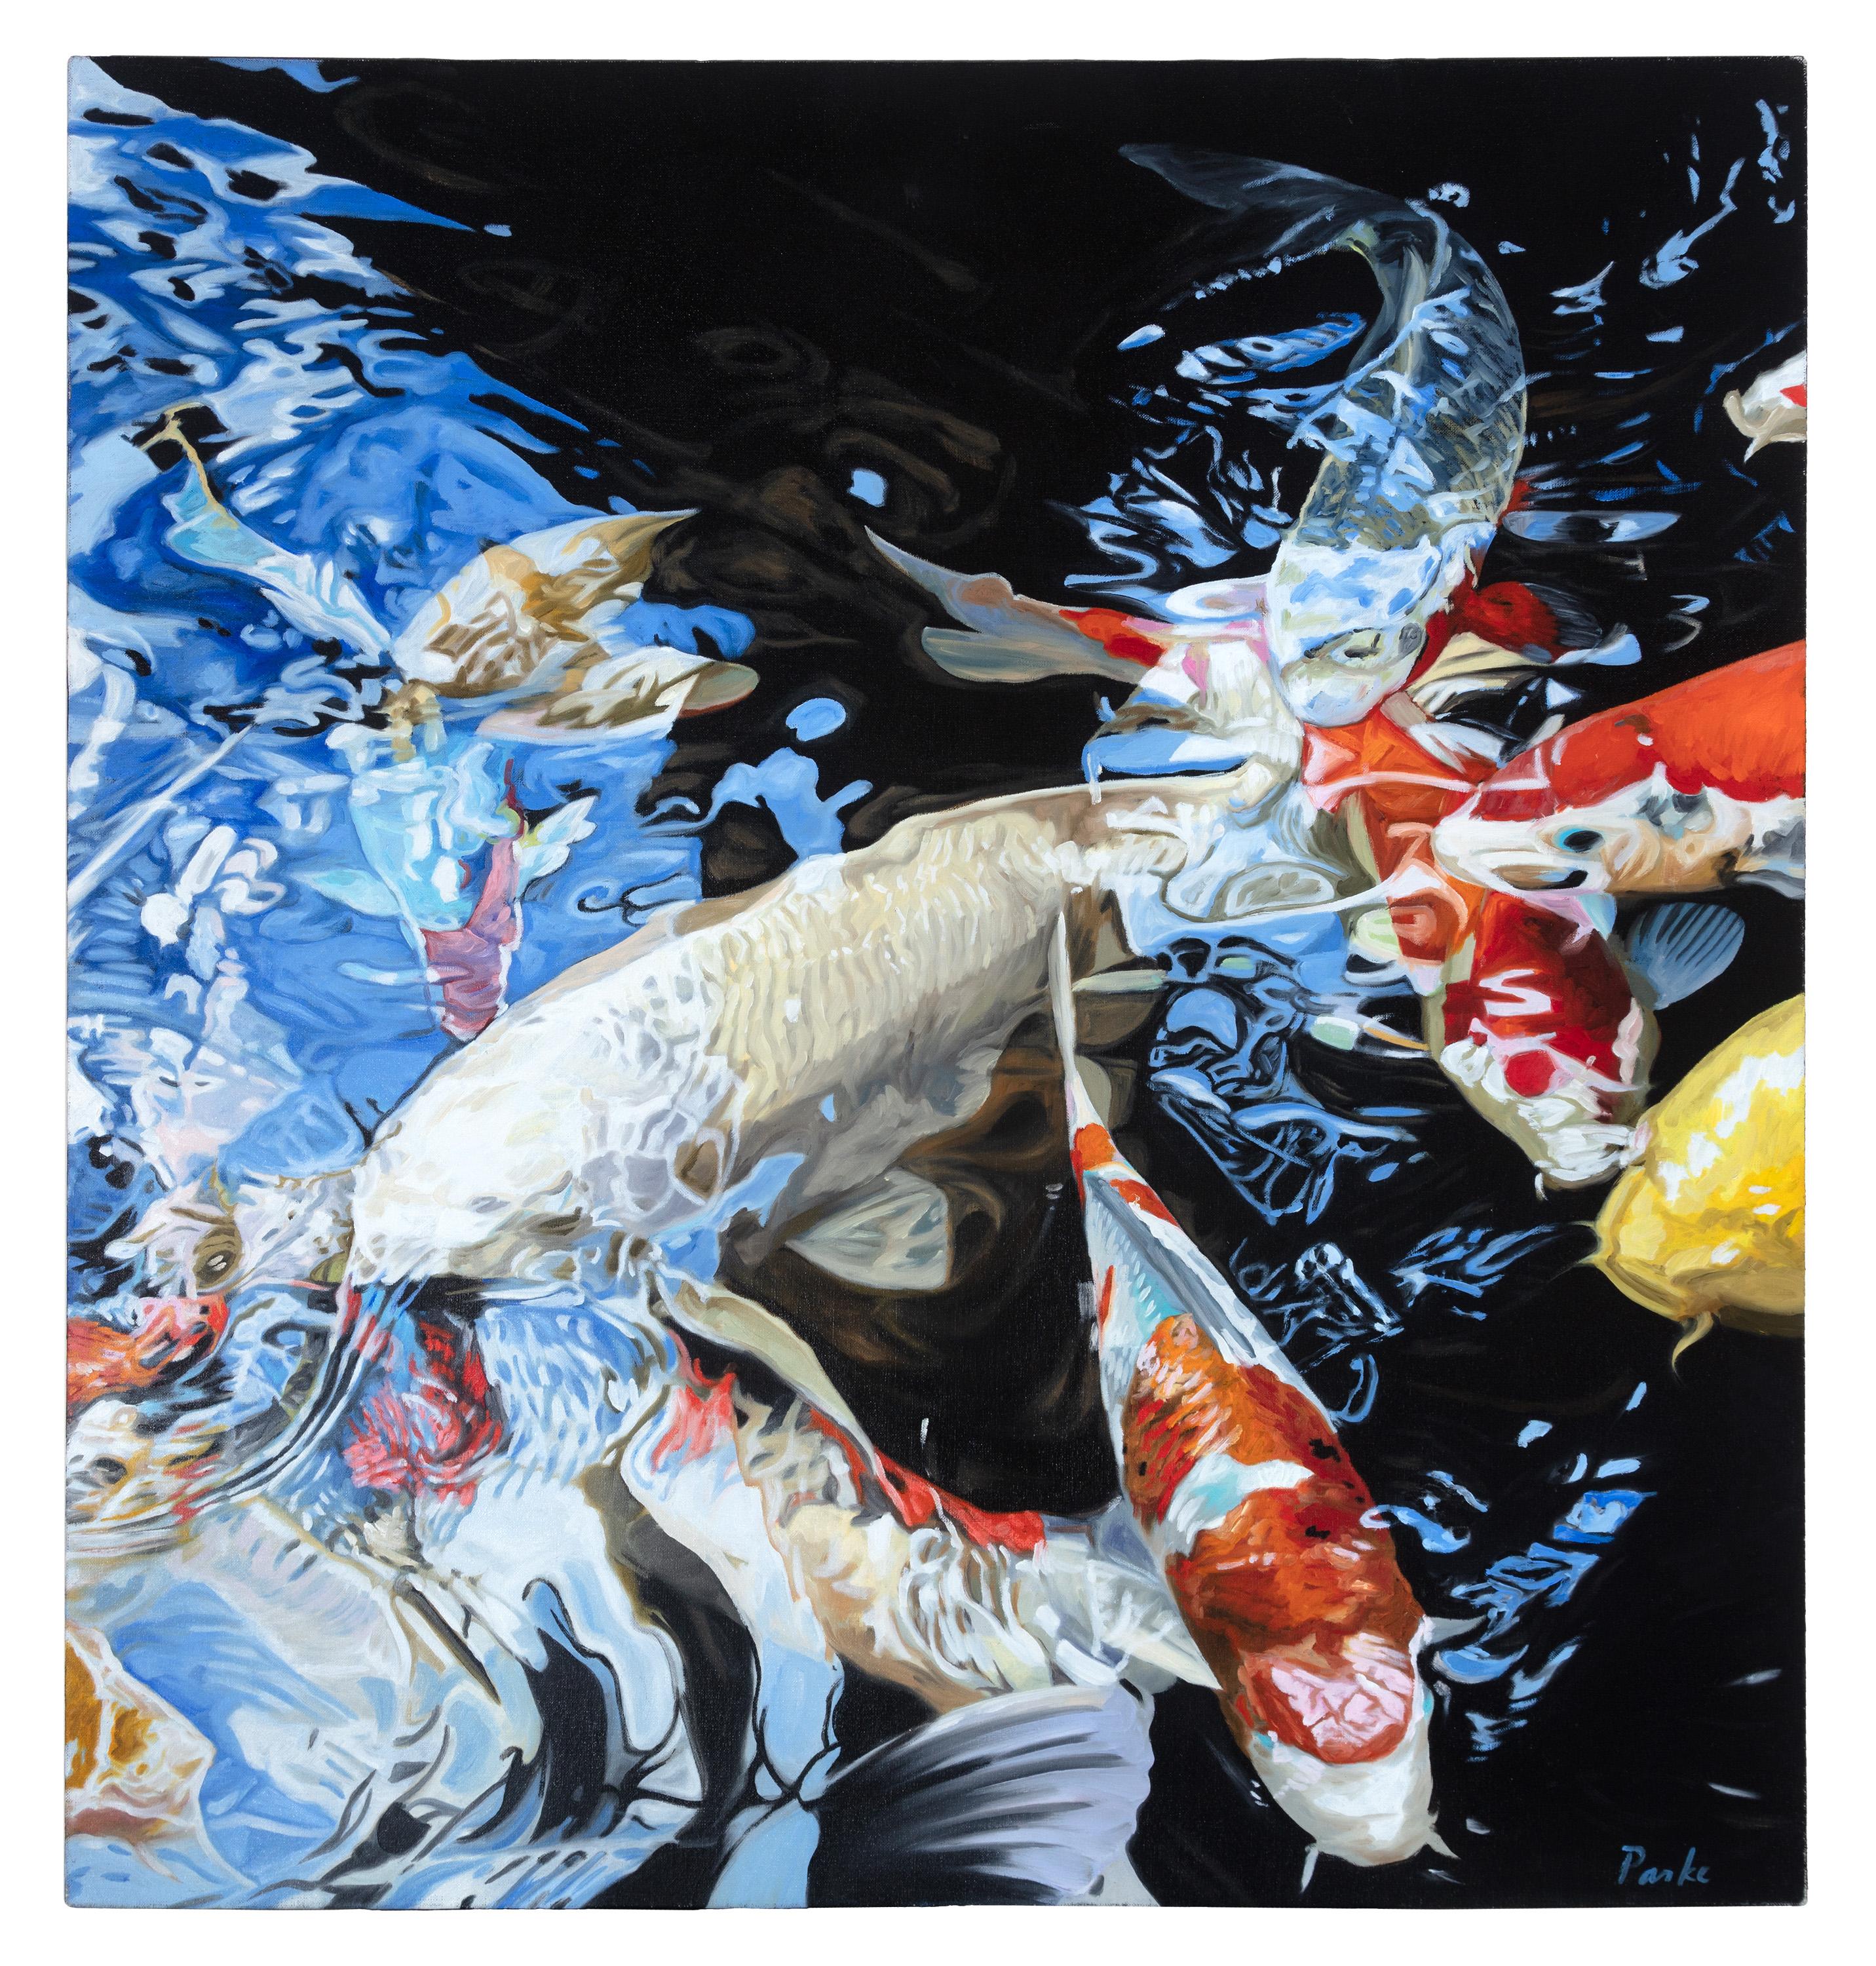 Leslie Parke Animal Painting - "Koi Fish II, " Oil on Linen Photo-realistic Painting, Signed